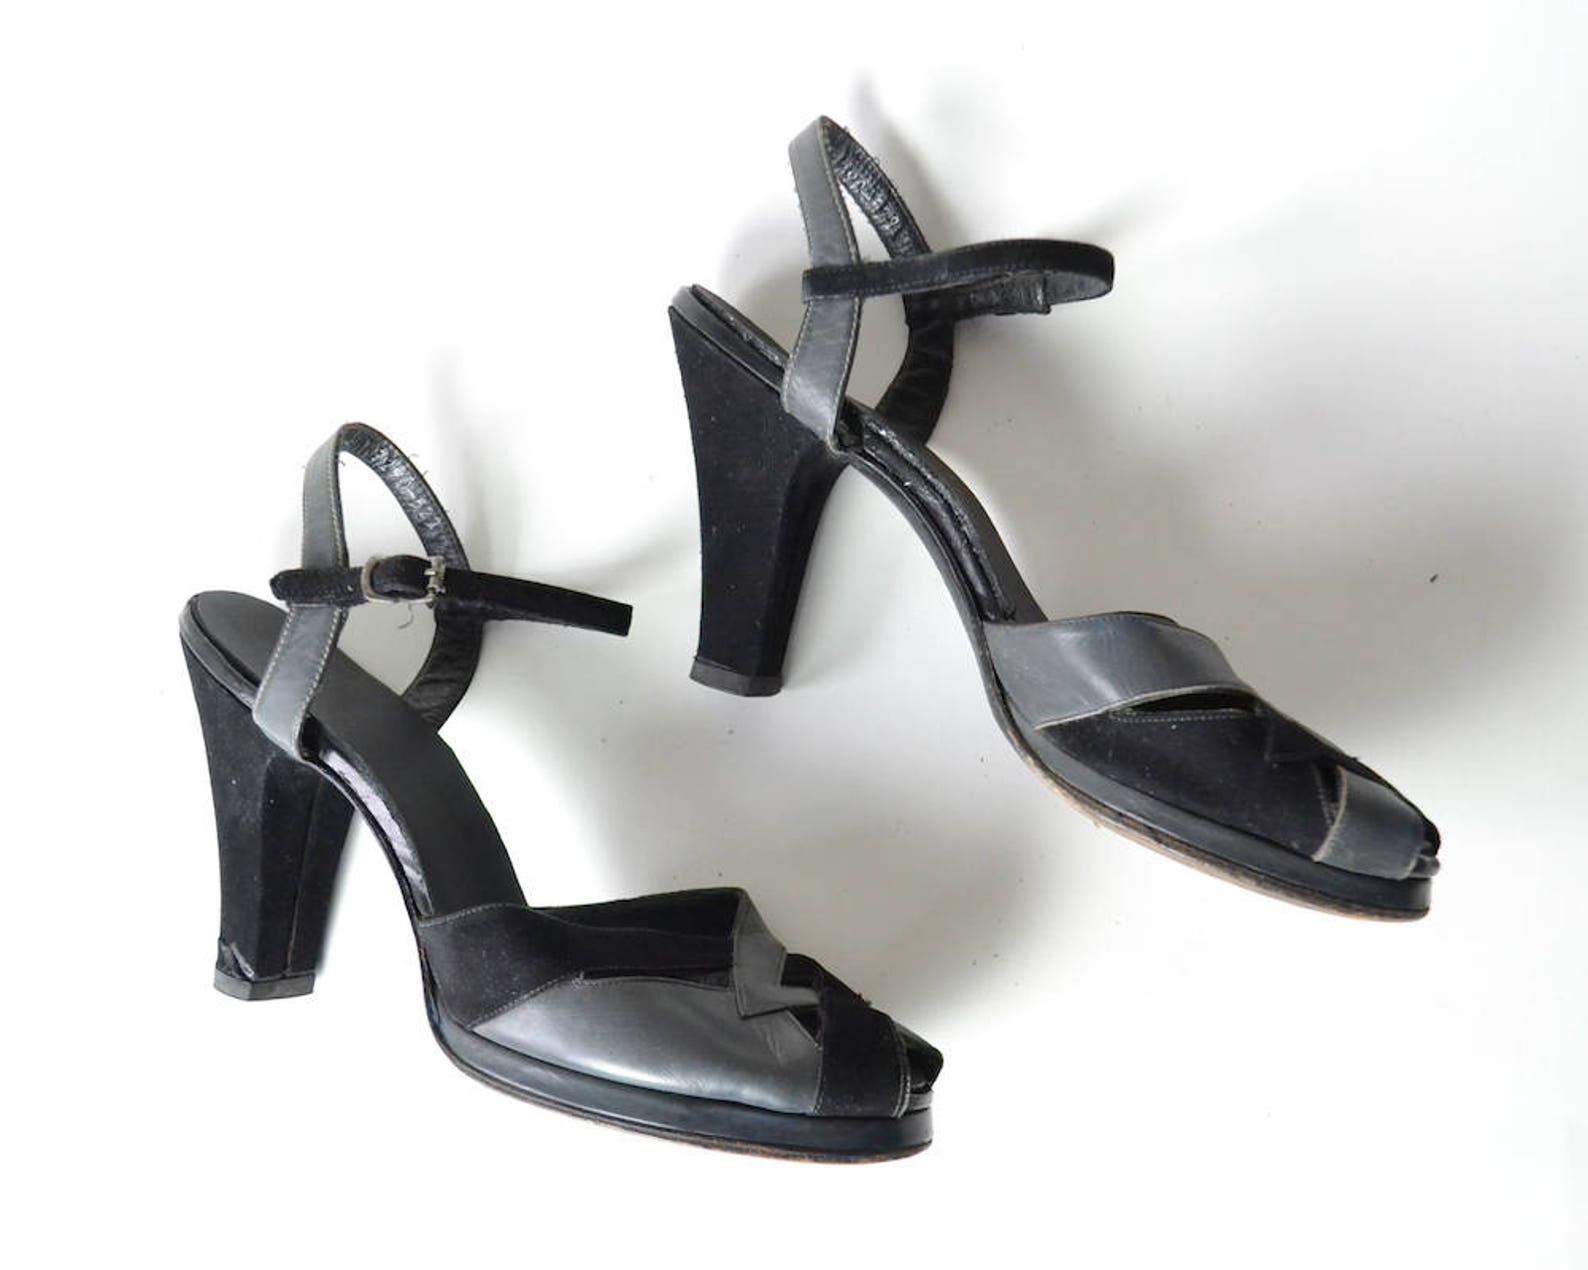 Vintage 1940s Shoes 40s Black and Grey Suede Heels Pumps | Etsy